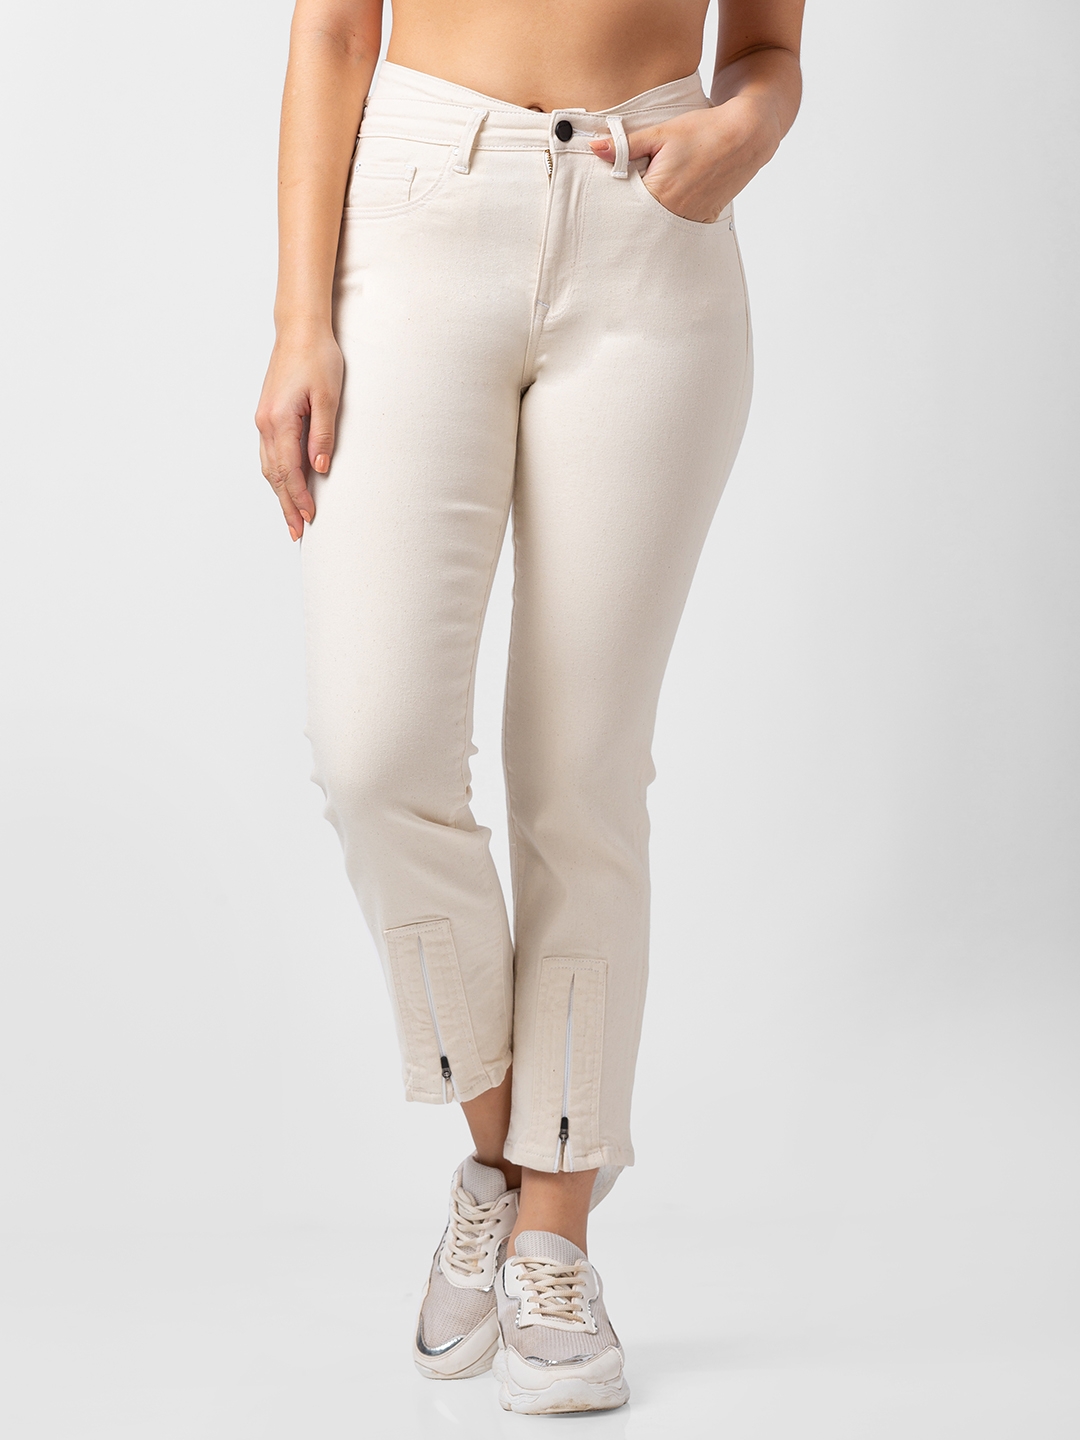 Women's White Lycra Solid Jeans